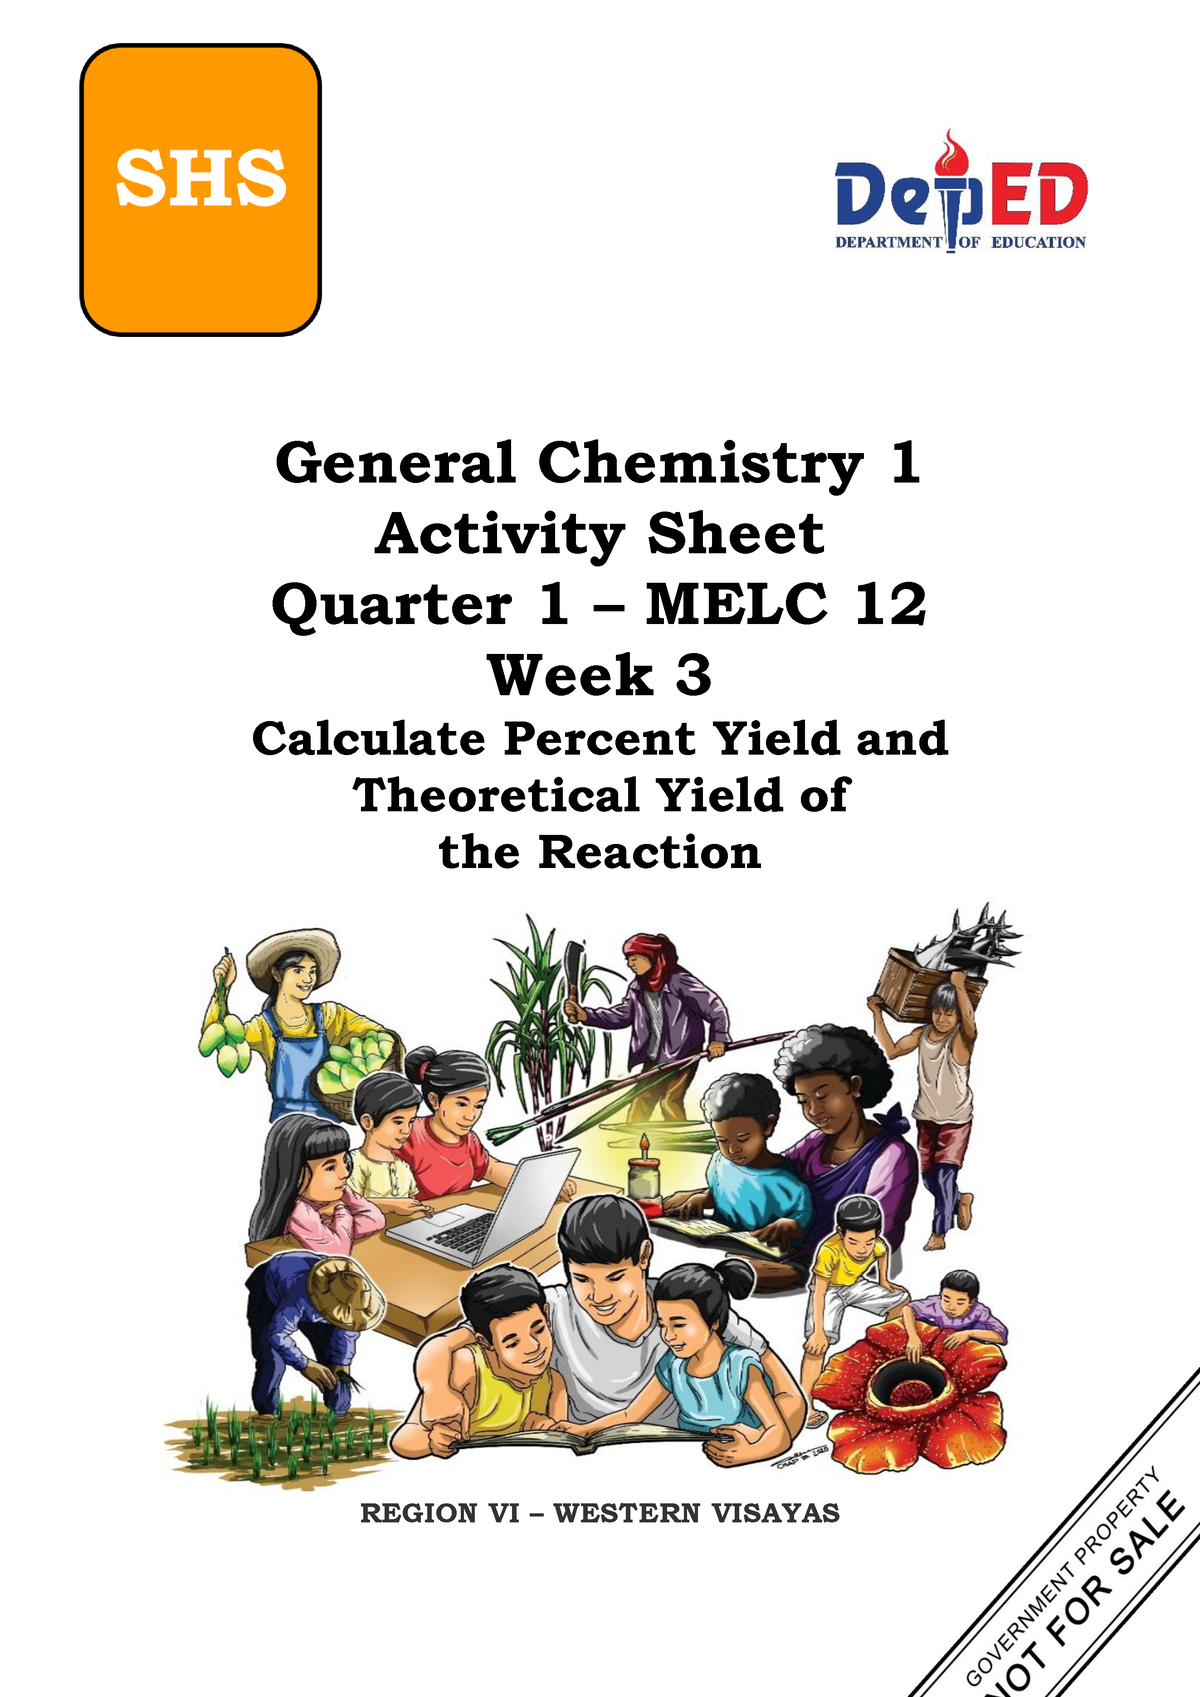 SHS General chemistry General Chemistry 1 Activity Sheet Quarter 1